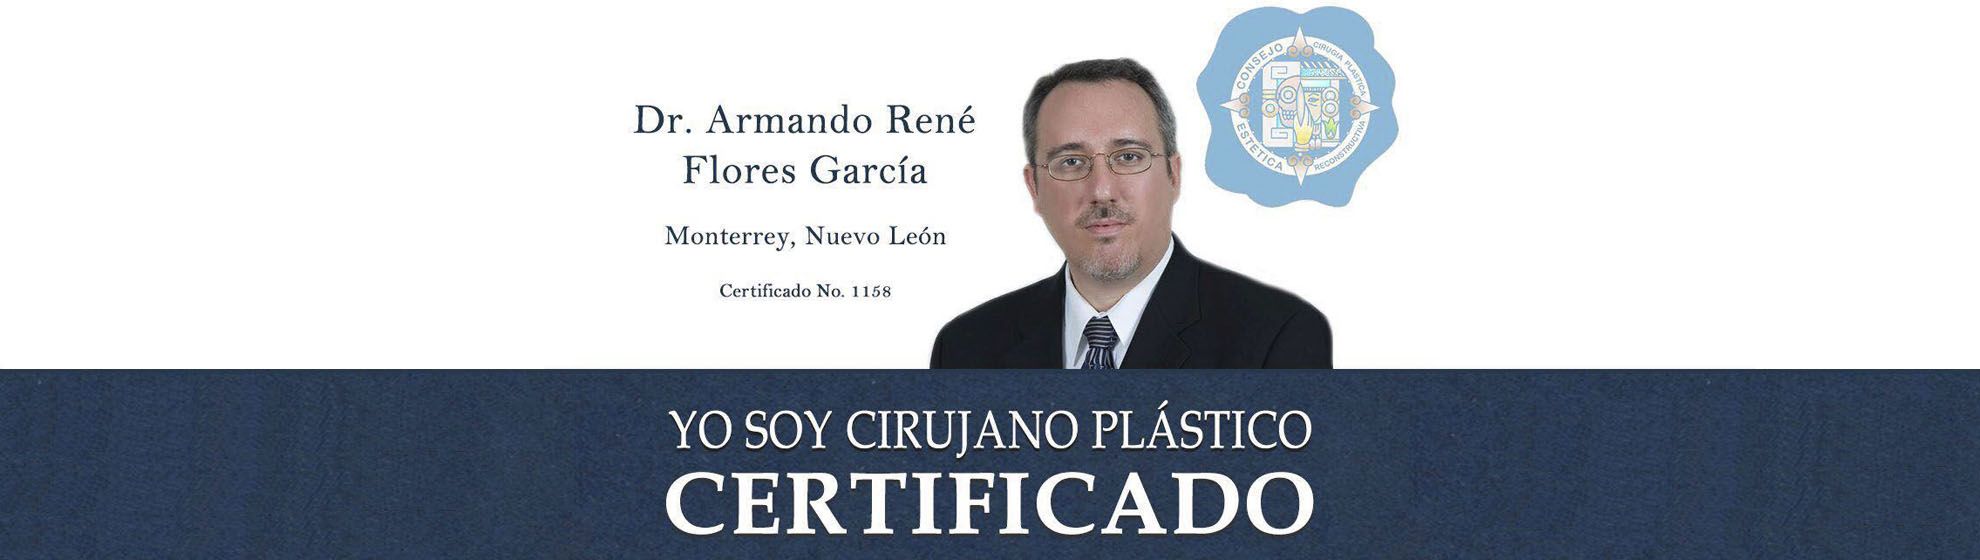 Dr. Armando Rene Flores García